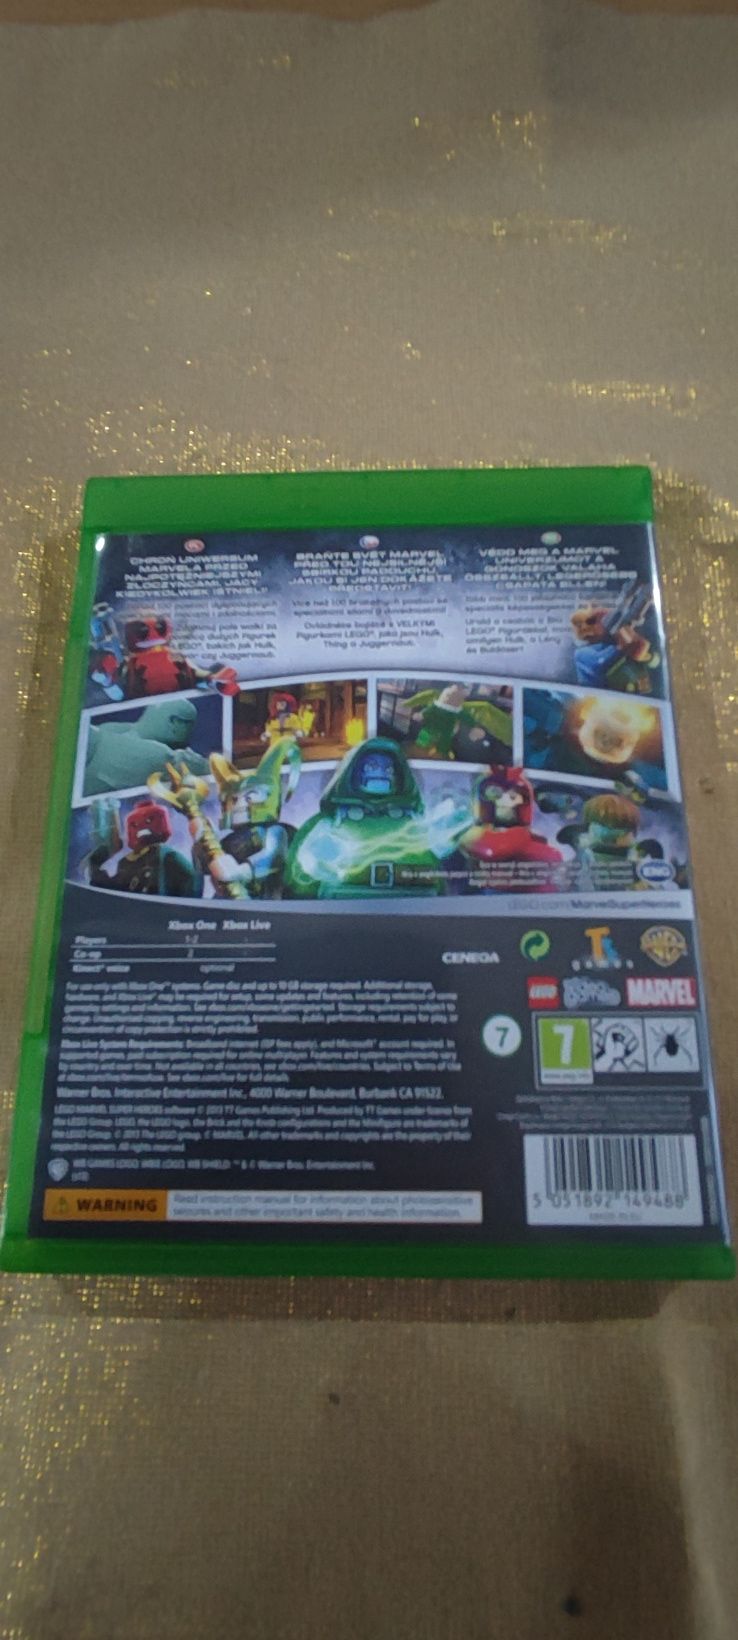 Lego Marvel Super Heroes (Xbox One)